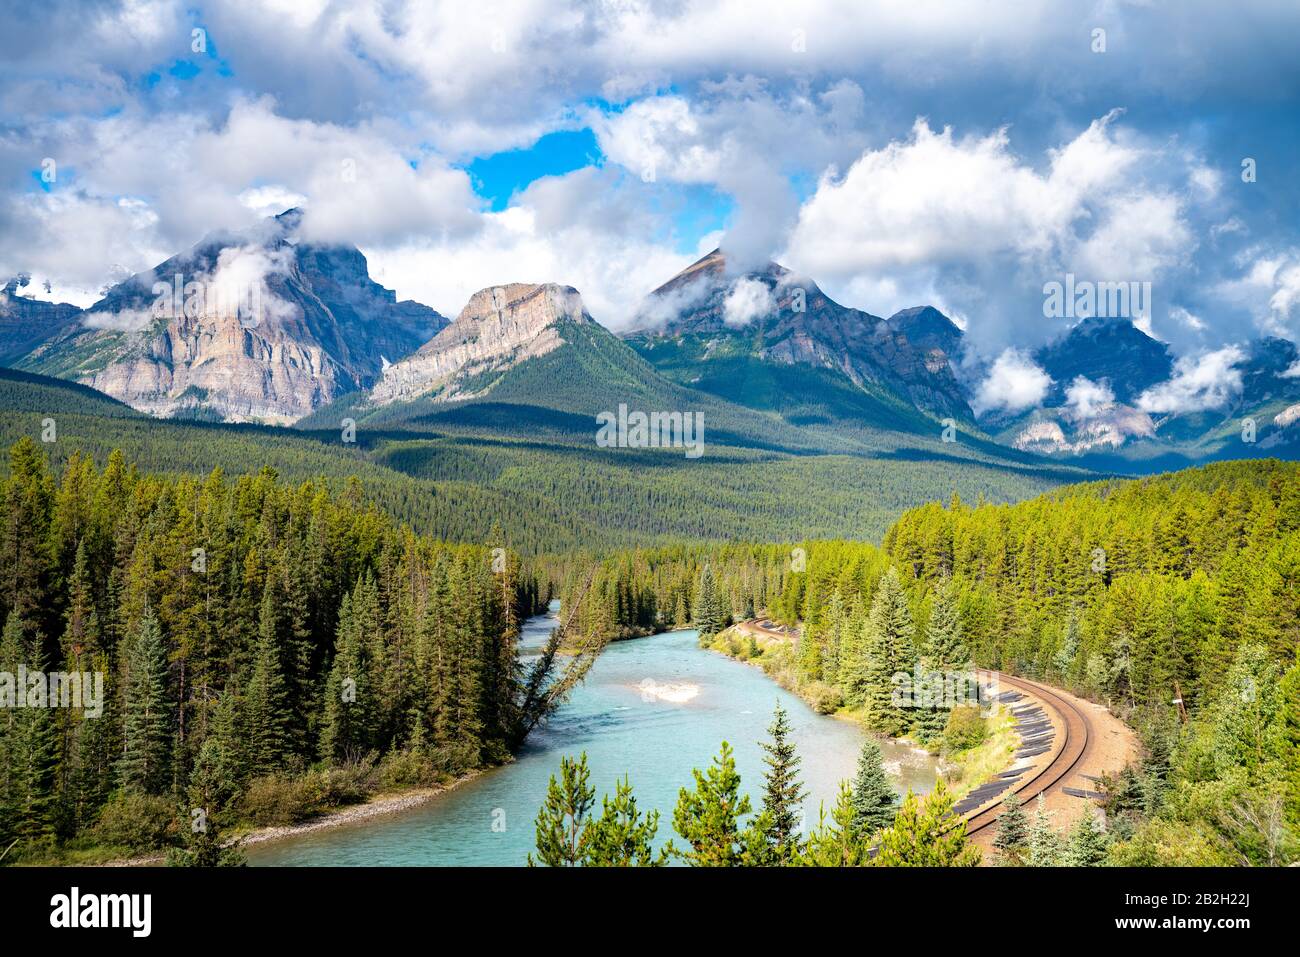 Morant's Curve, famous landscape with railway. Banff National Park, Canada Stock Photo